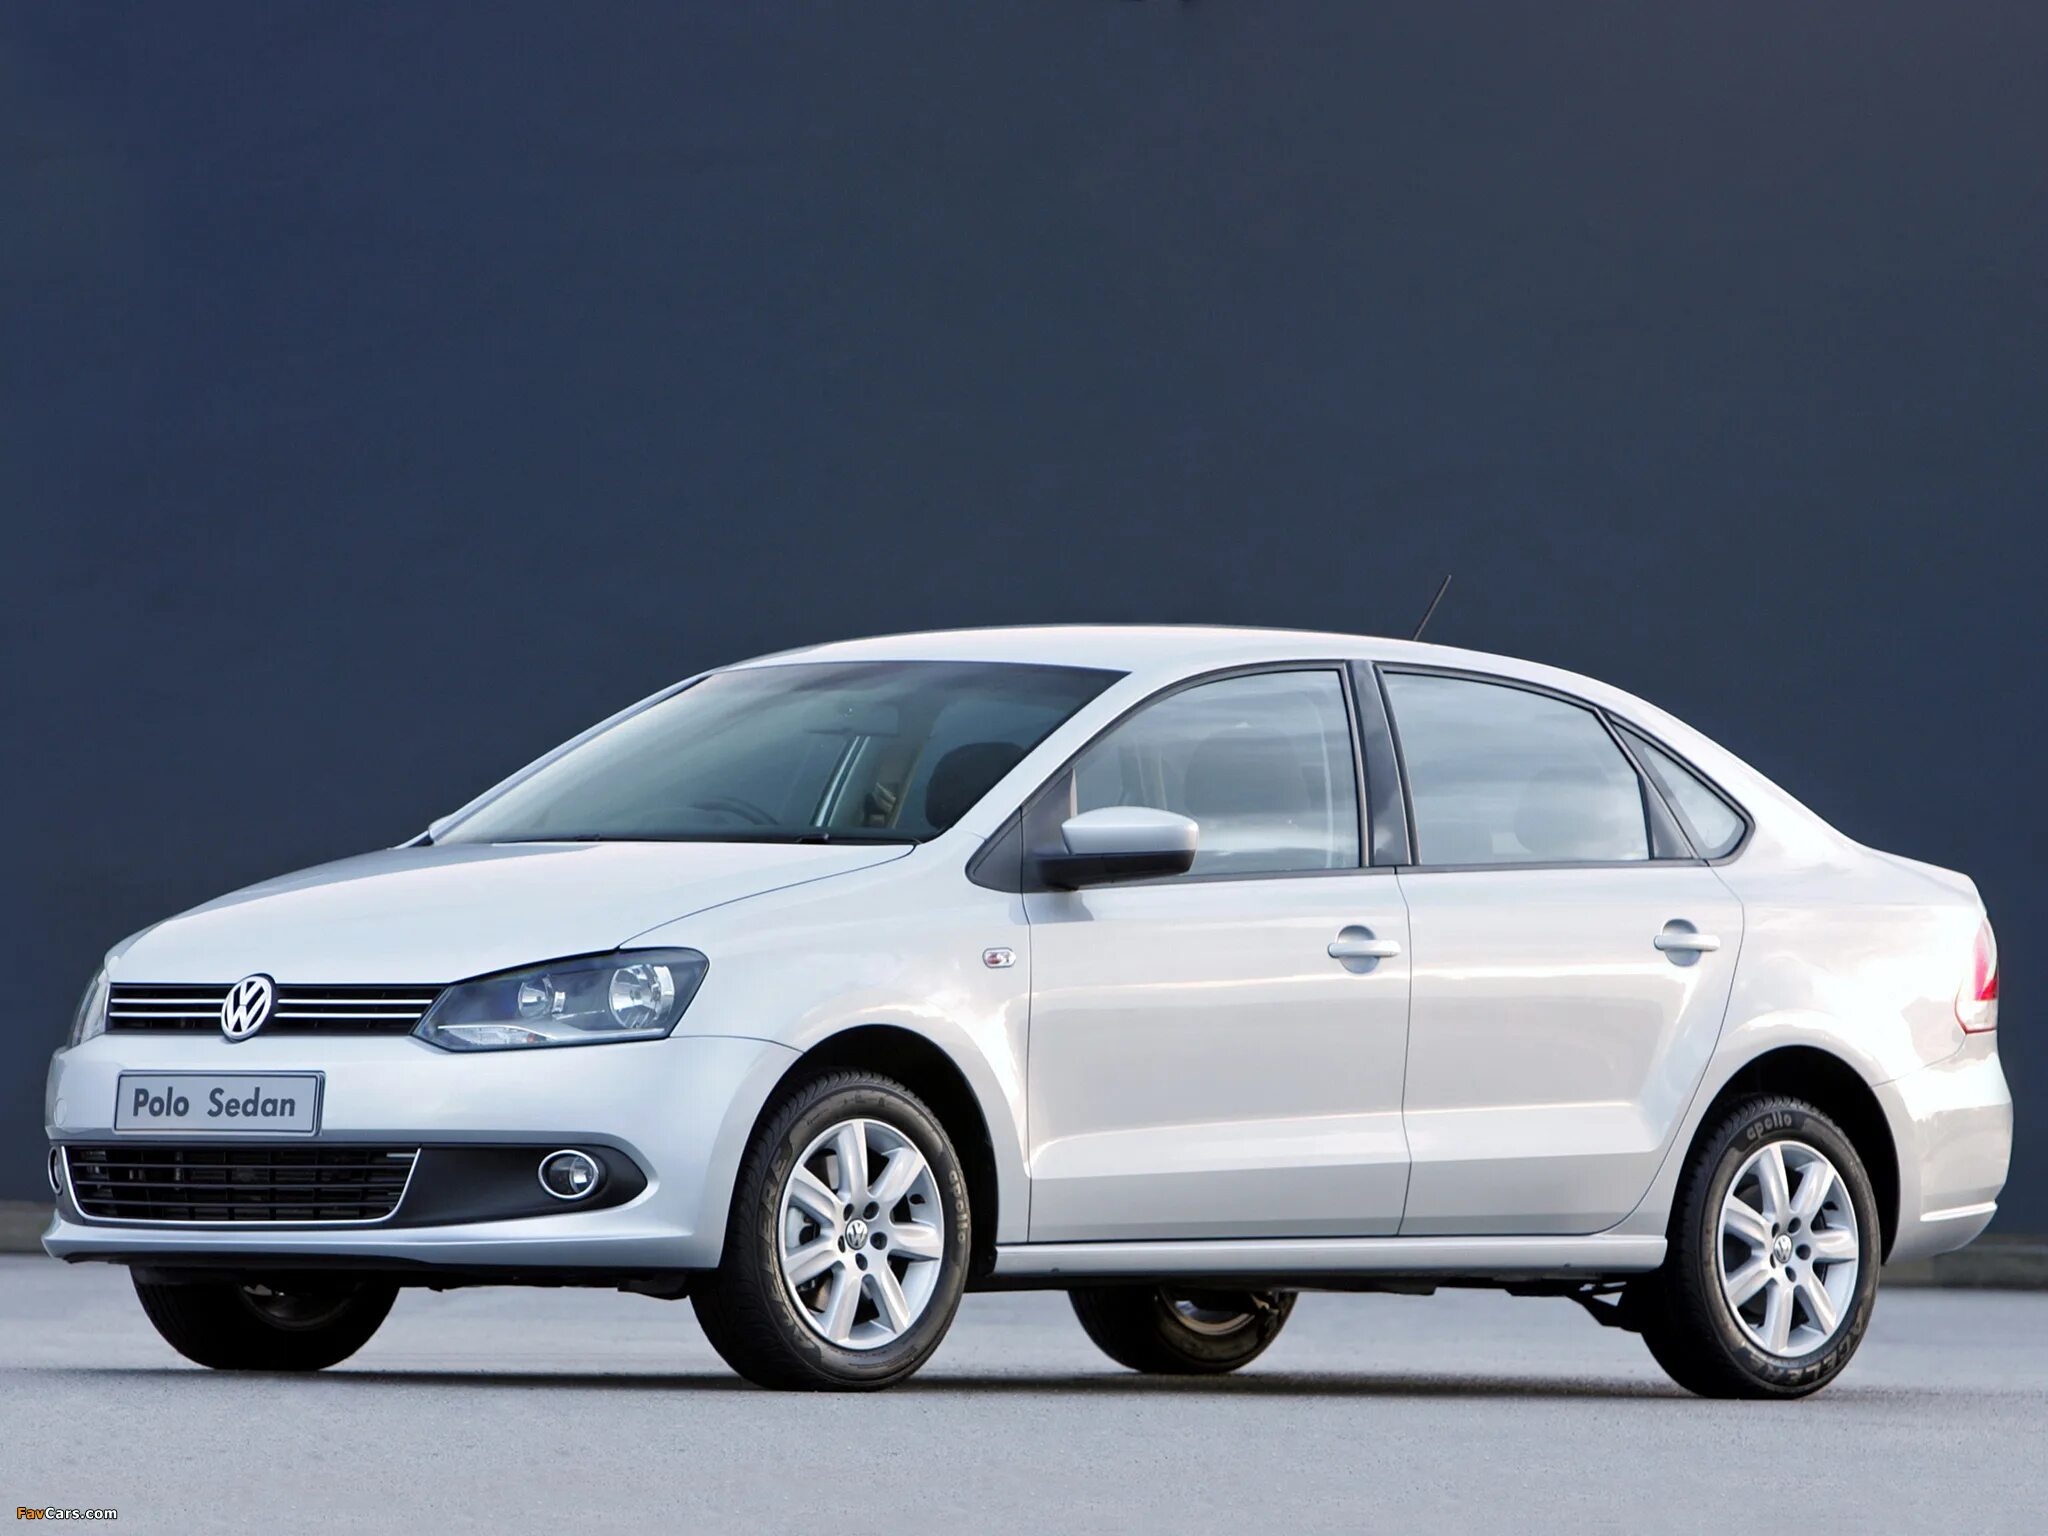 Polo v sedan. Volkswagen Polo sedan. Volkswagen Polo sedan (2010). Volkswagen Polo 2010 седан. Фольксваген поло седан 2010.